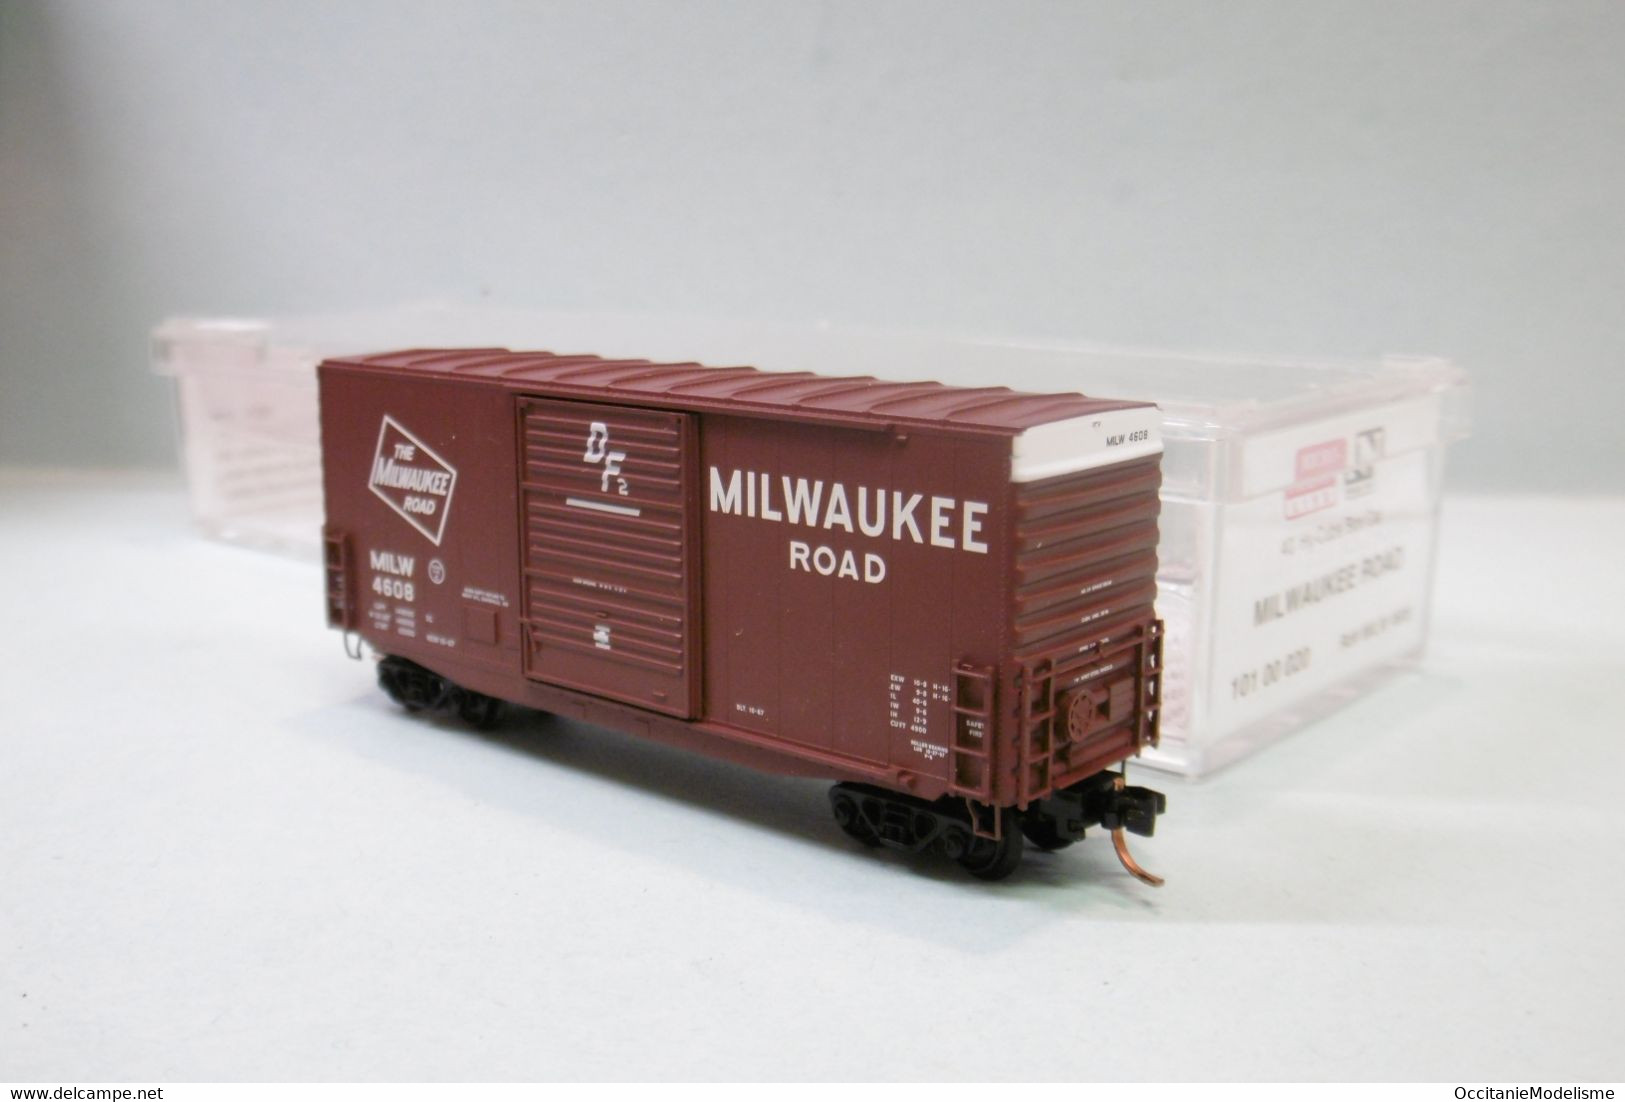 Micro-Trains Line - WAGON US 40' Hy-Cube Box Car MILWAUKEE ROAD Réf. 101 00 020 BO N 1/160 - Wagons Marchandises